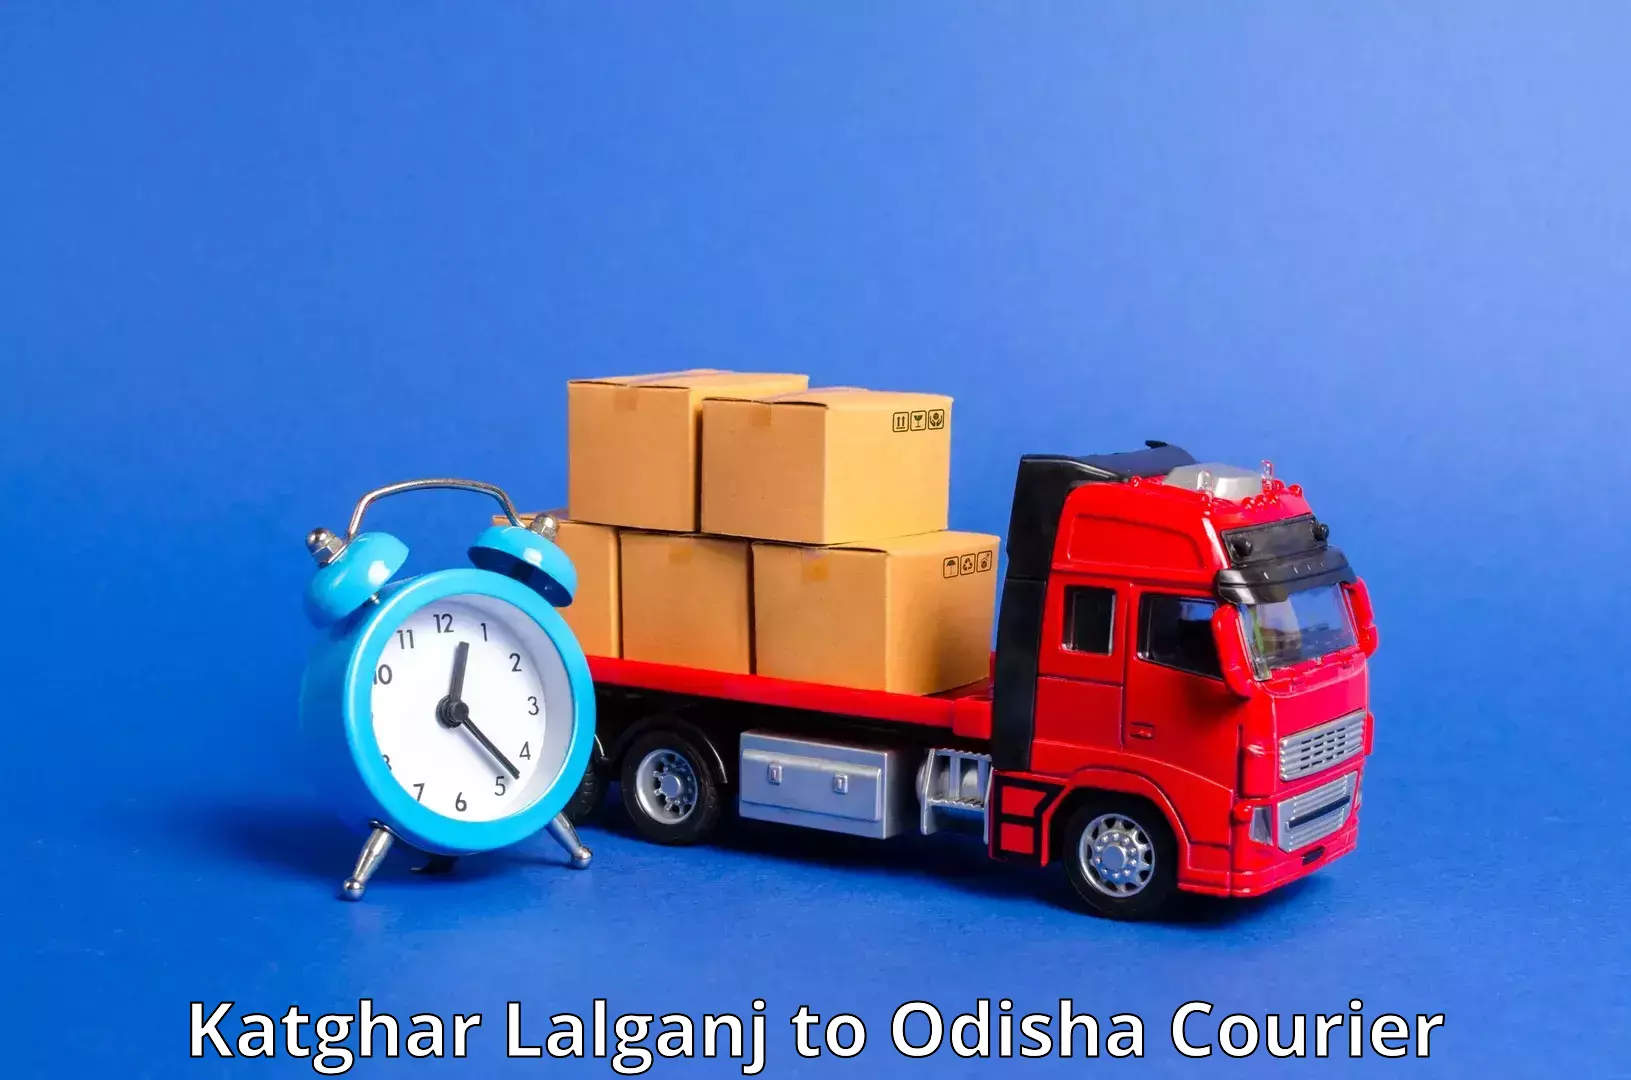 Express mail solutions Katghar Lalganj to Odisha